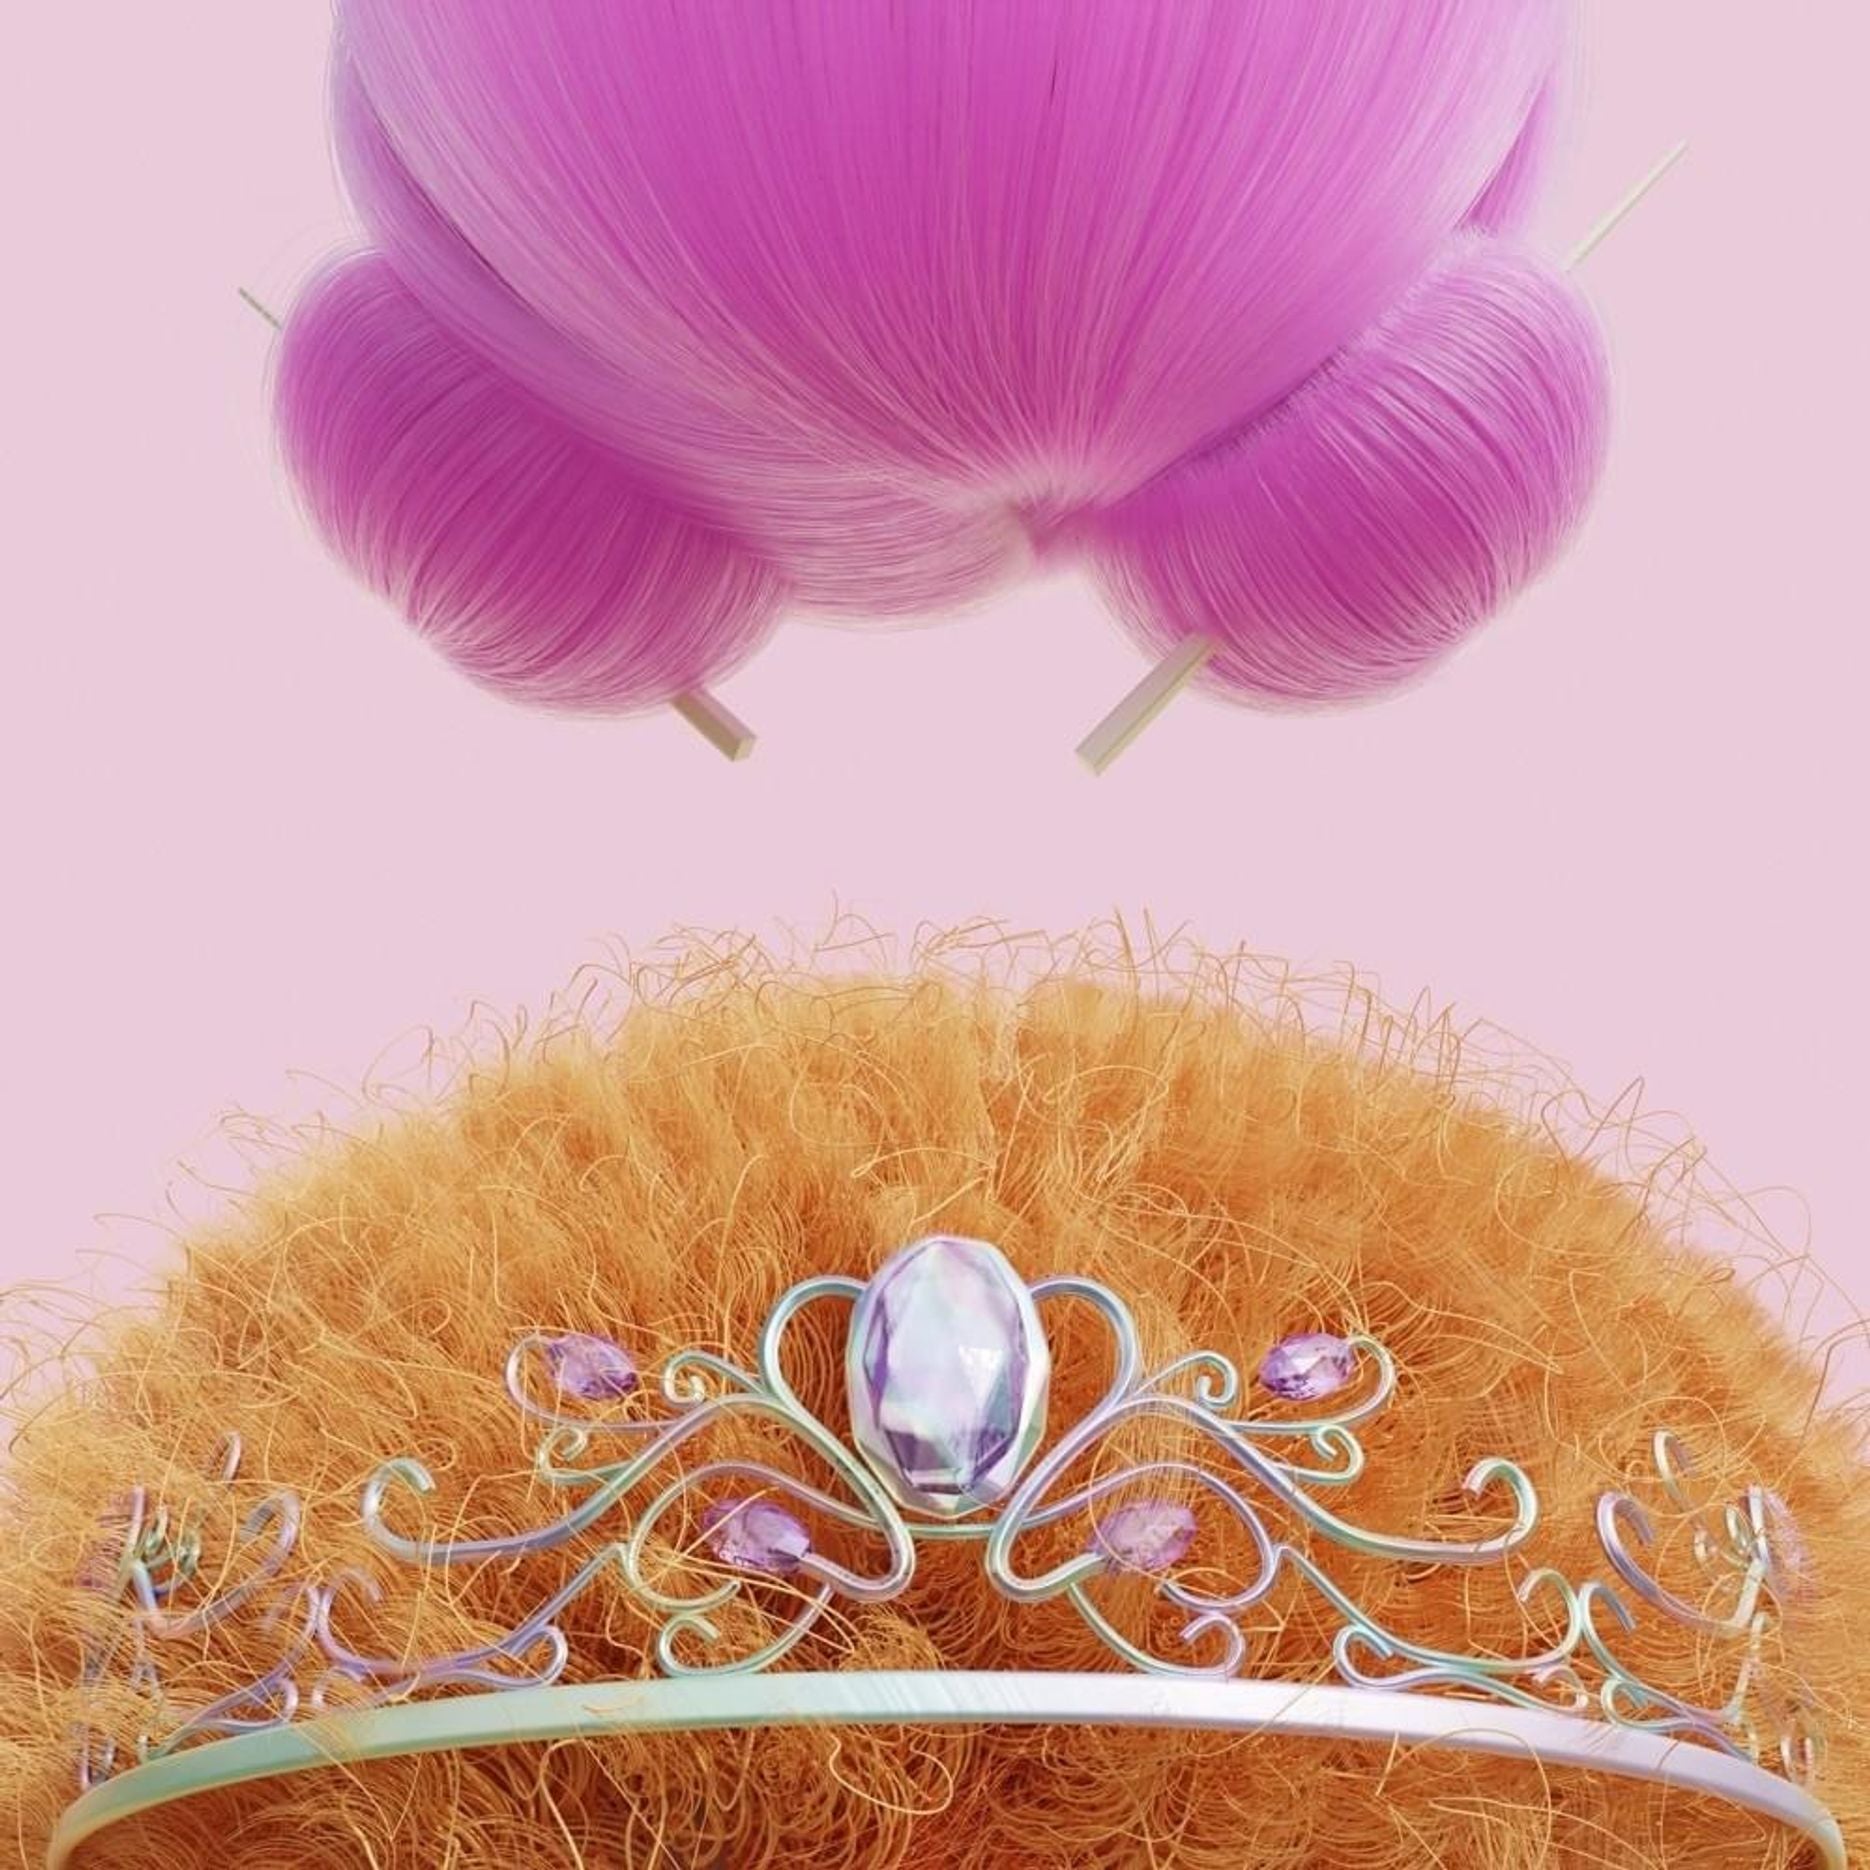 How "Princess Diana" by Ice Spice & Nicki Minaj was made